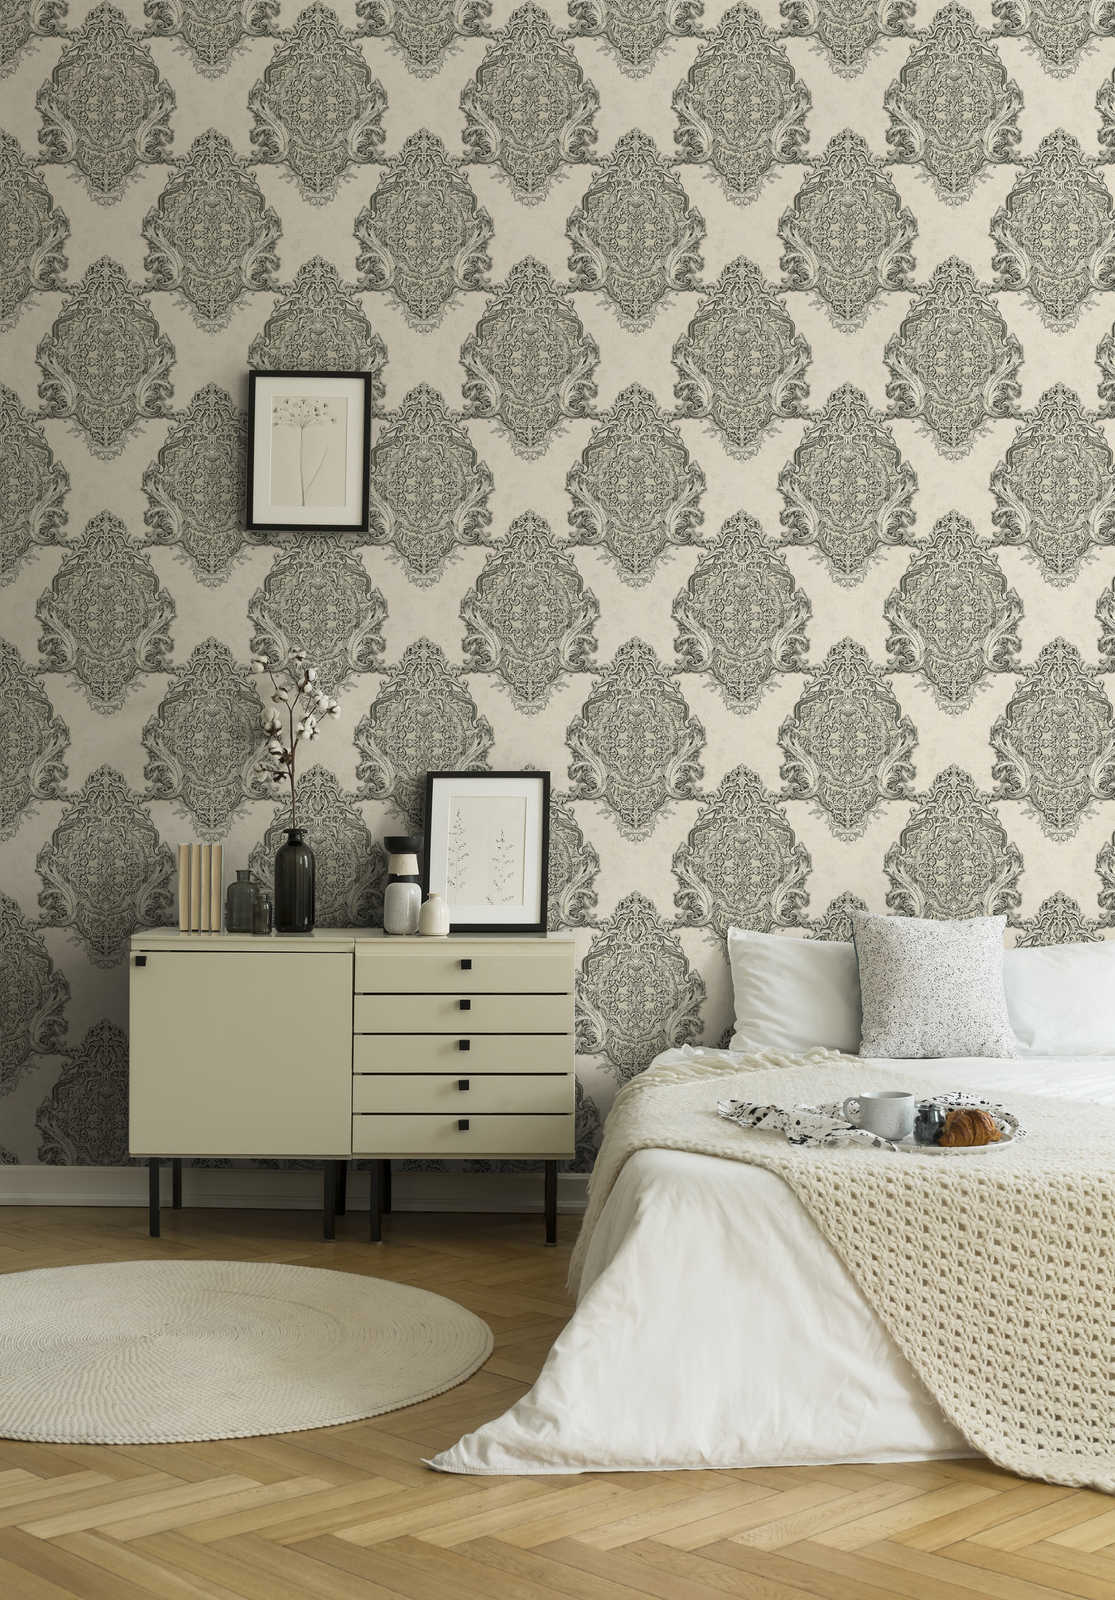             Ornament wallpaper with filigree metallic design - beige, grey
        